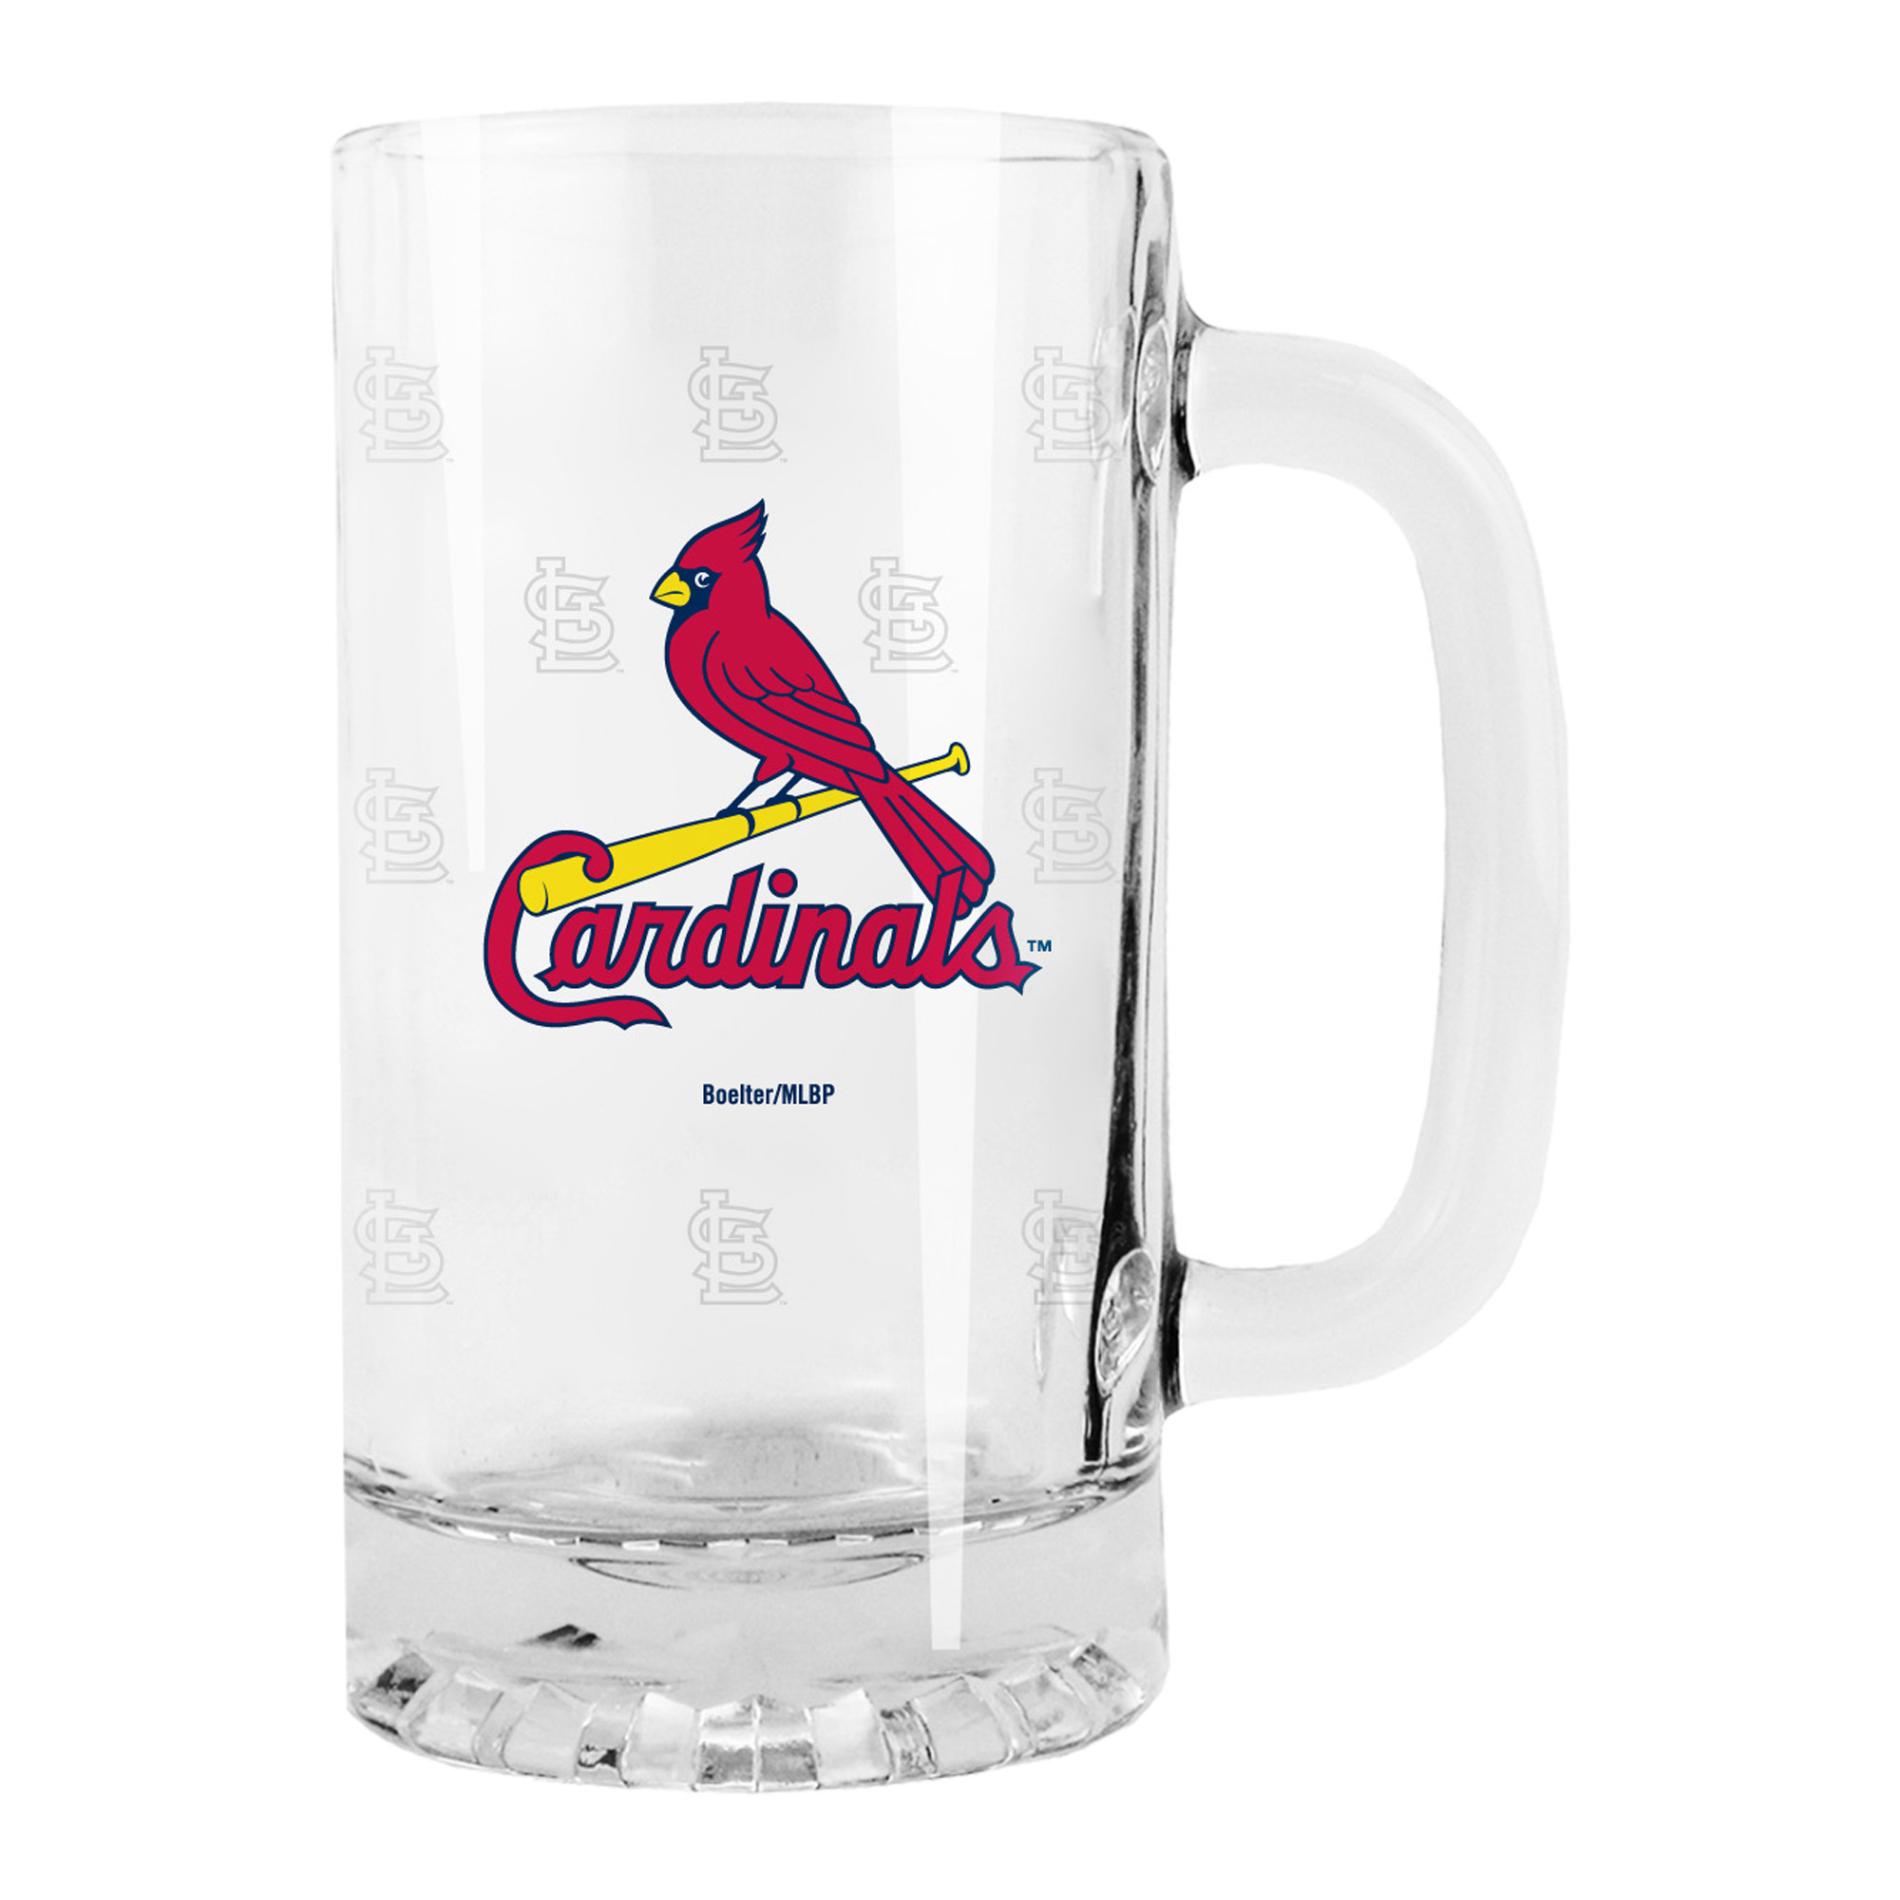 MLB Collectible Glass Mug - St. Louis Cardinals